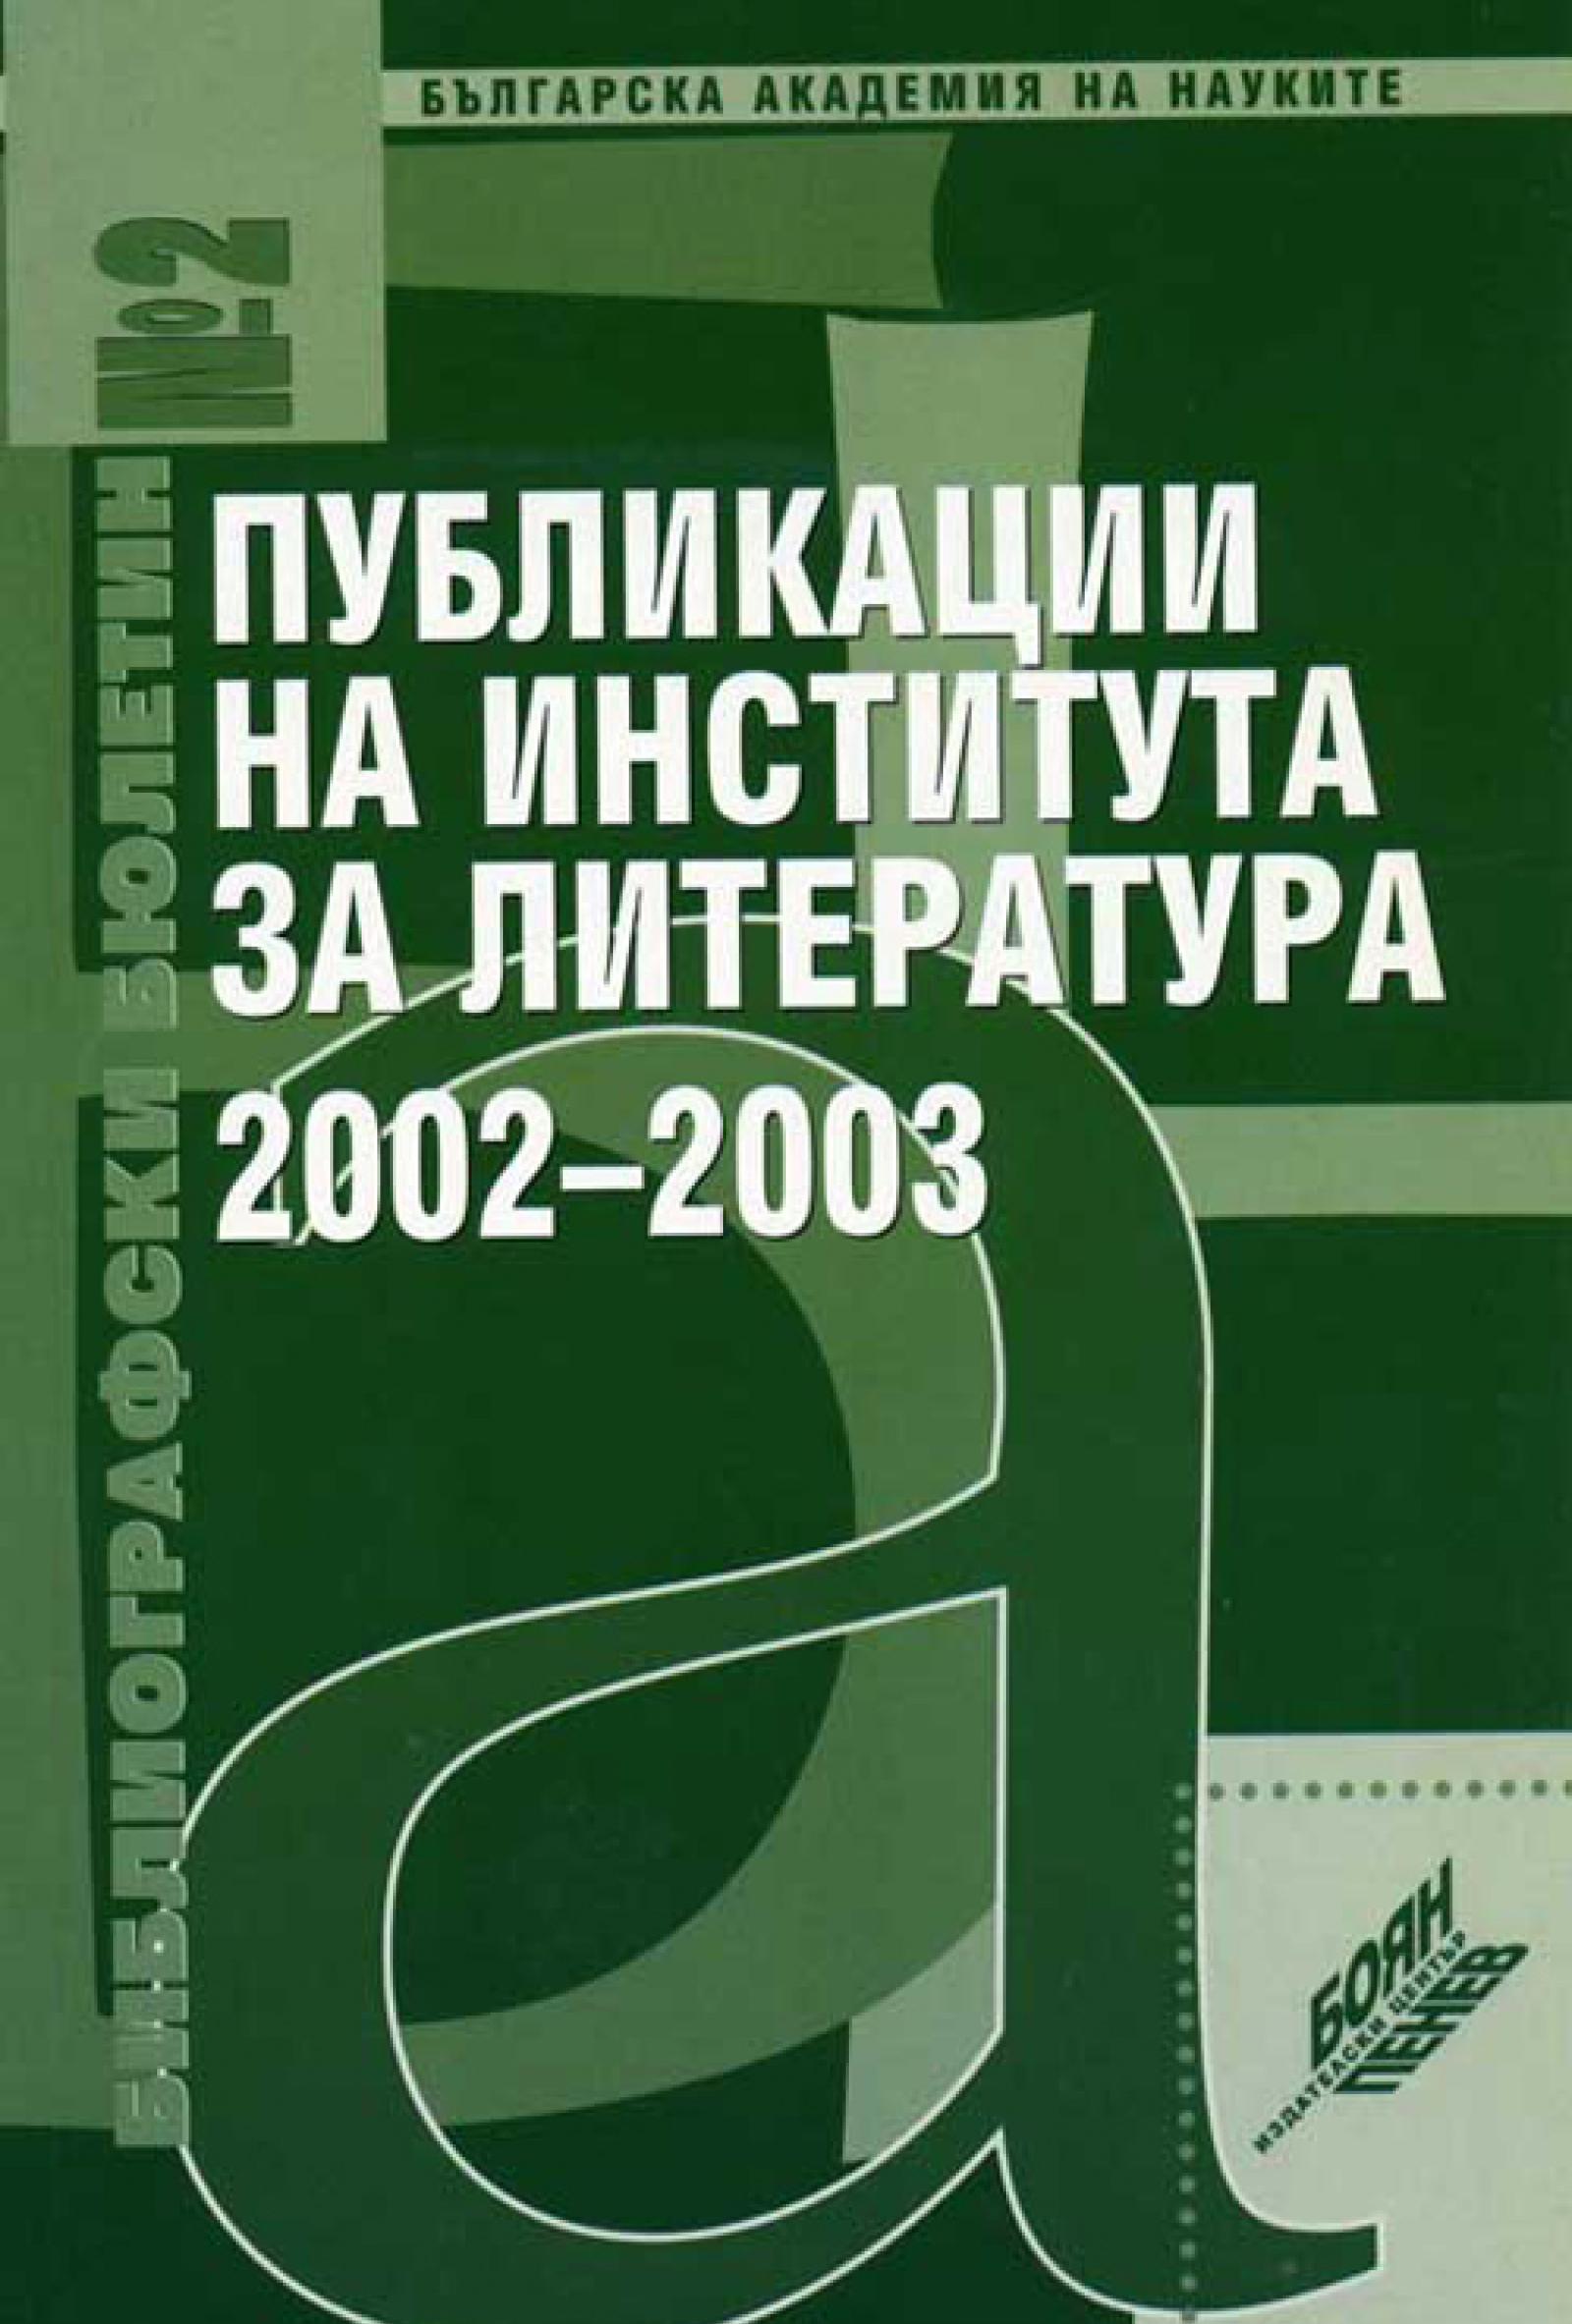 Publications_2002_2003.jpg